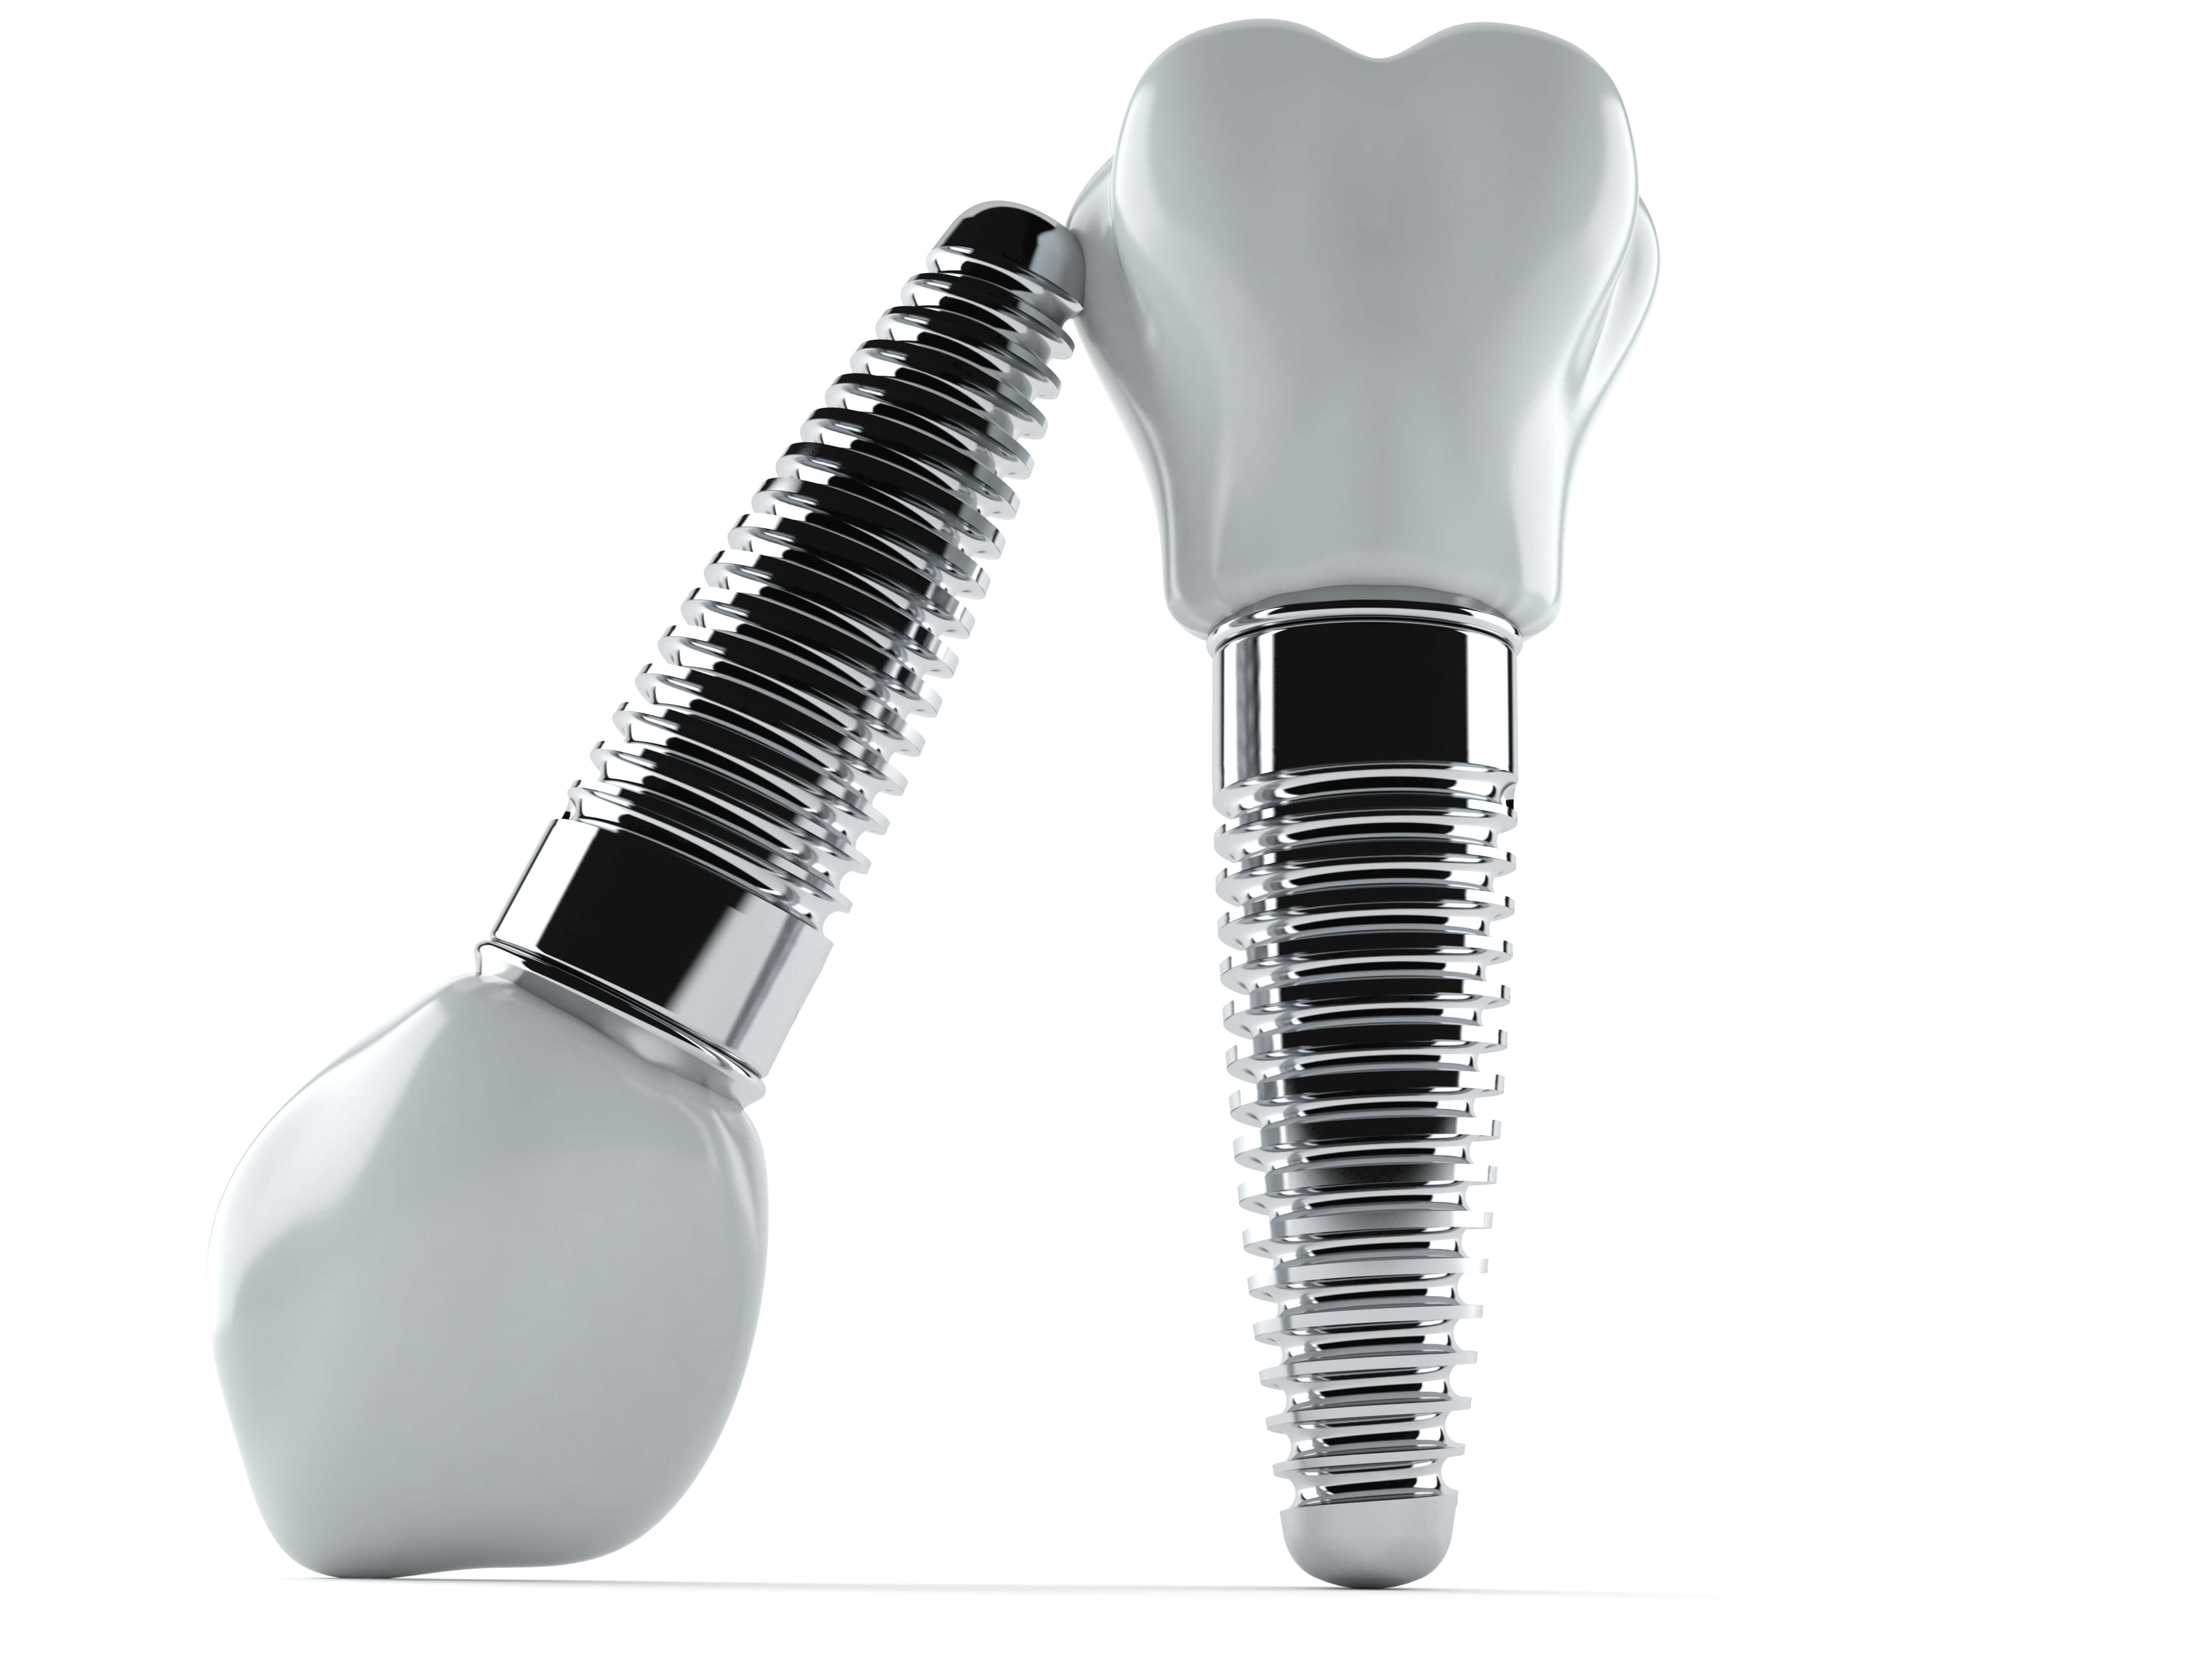 Dental implants isolated on white background